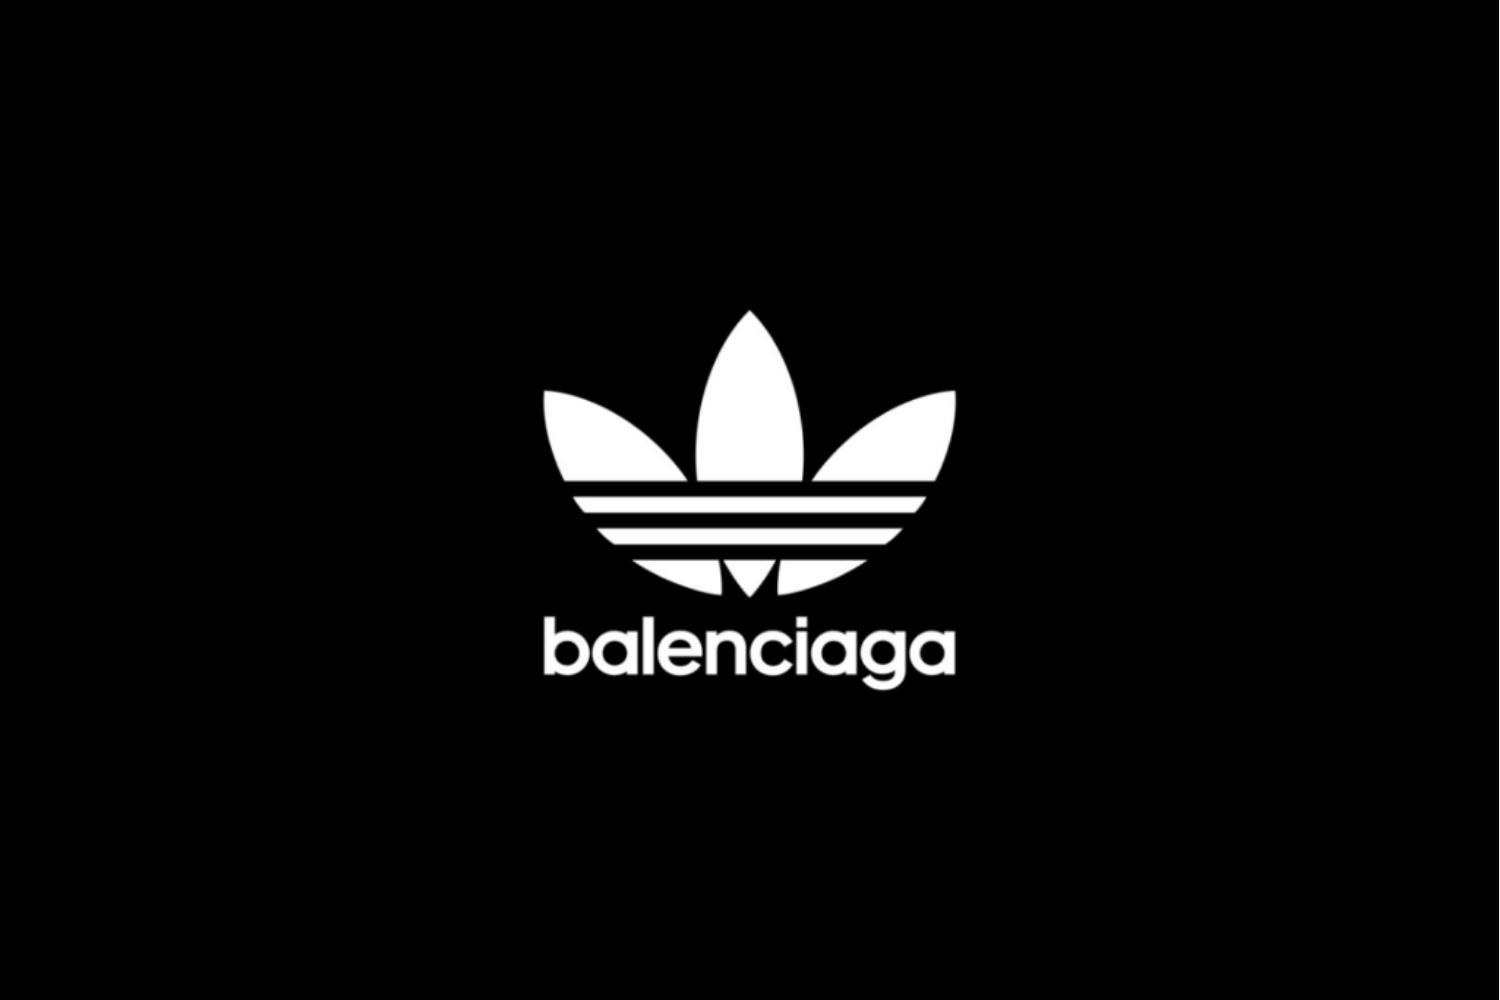 Die Balenciaga x adidas Originals Collab ist endlich offiziell